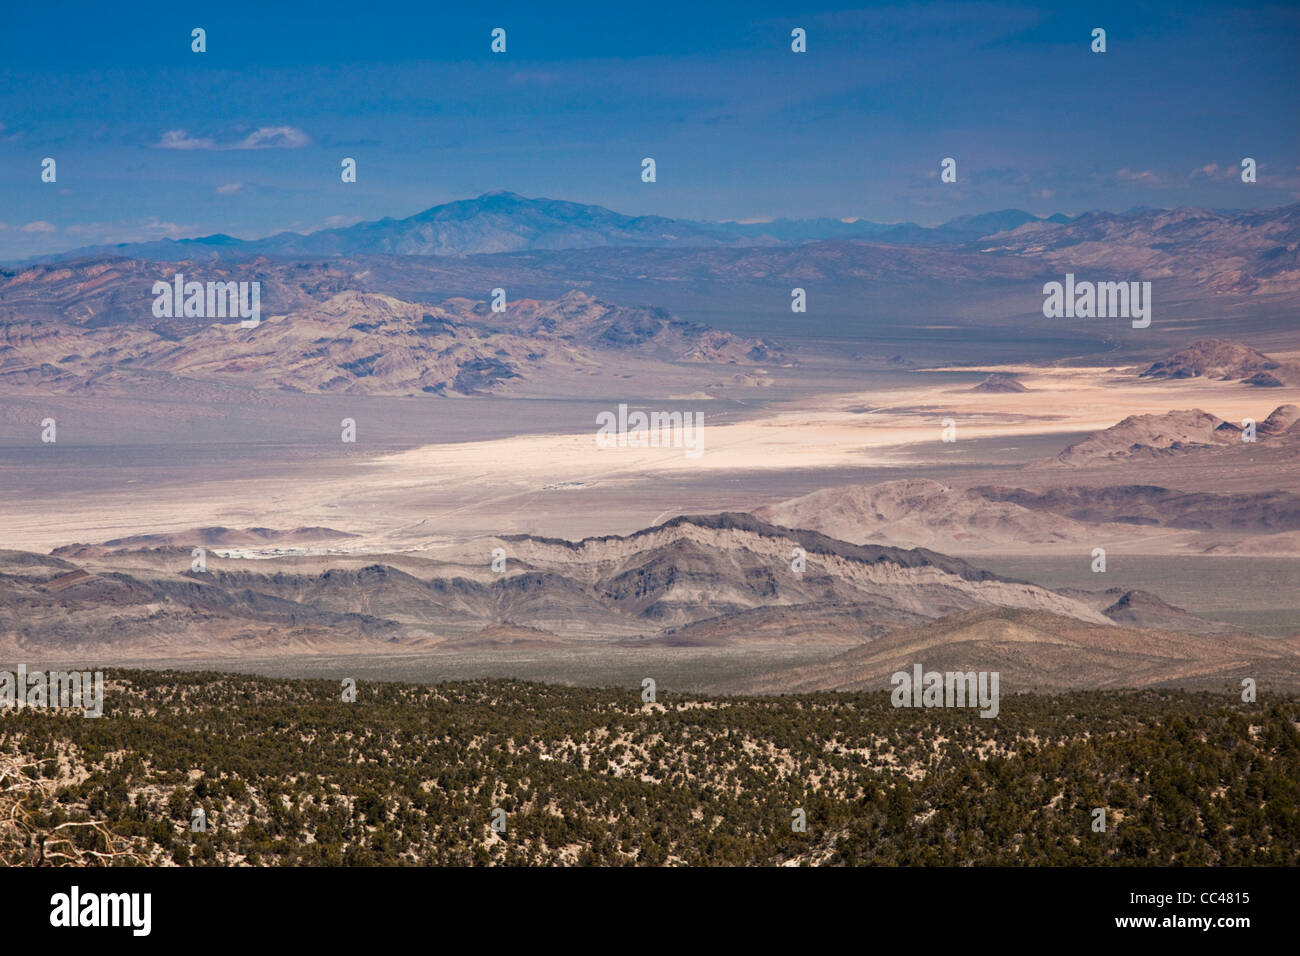 USA, Nevada, Las Vegas Area, Mt. Charleston, elevated view of the Great Basin Desert Stock Photo